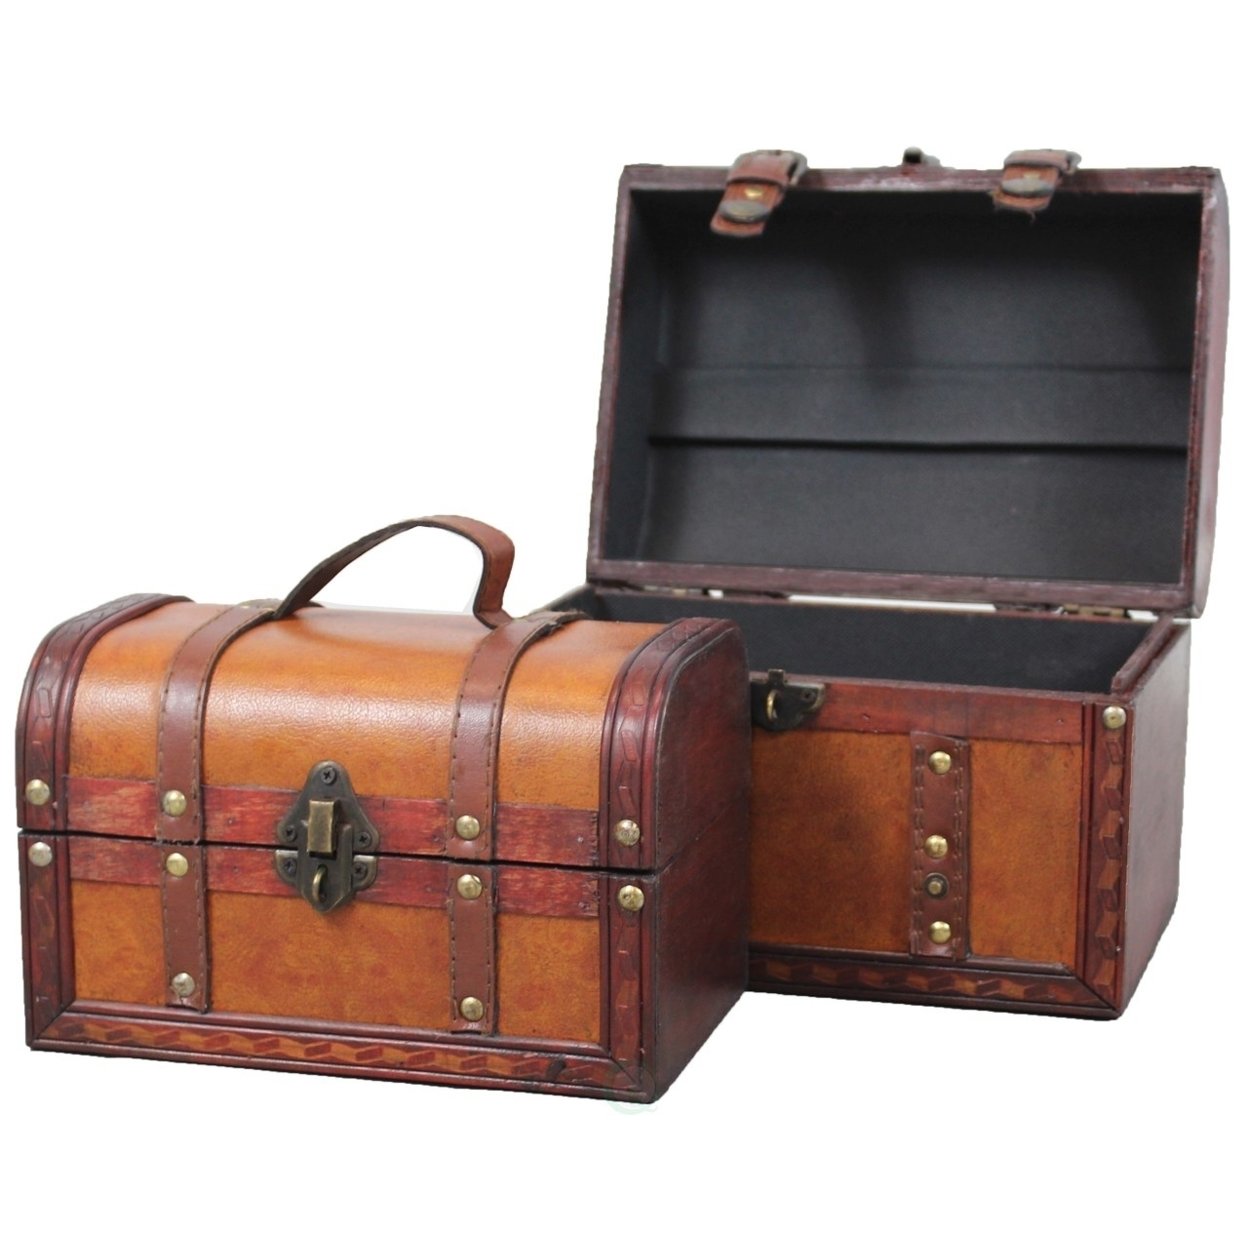 Decorative Leather Treasure Boxes - Set Of 2